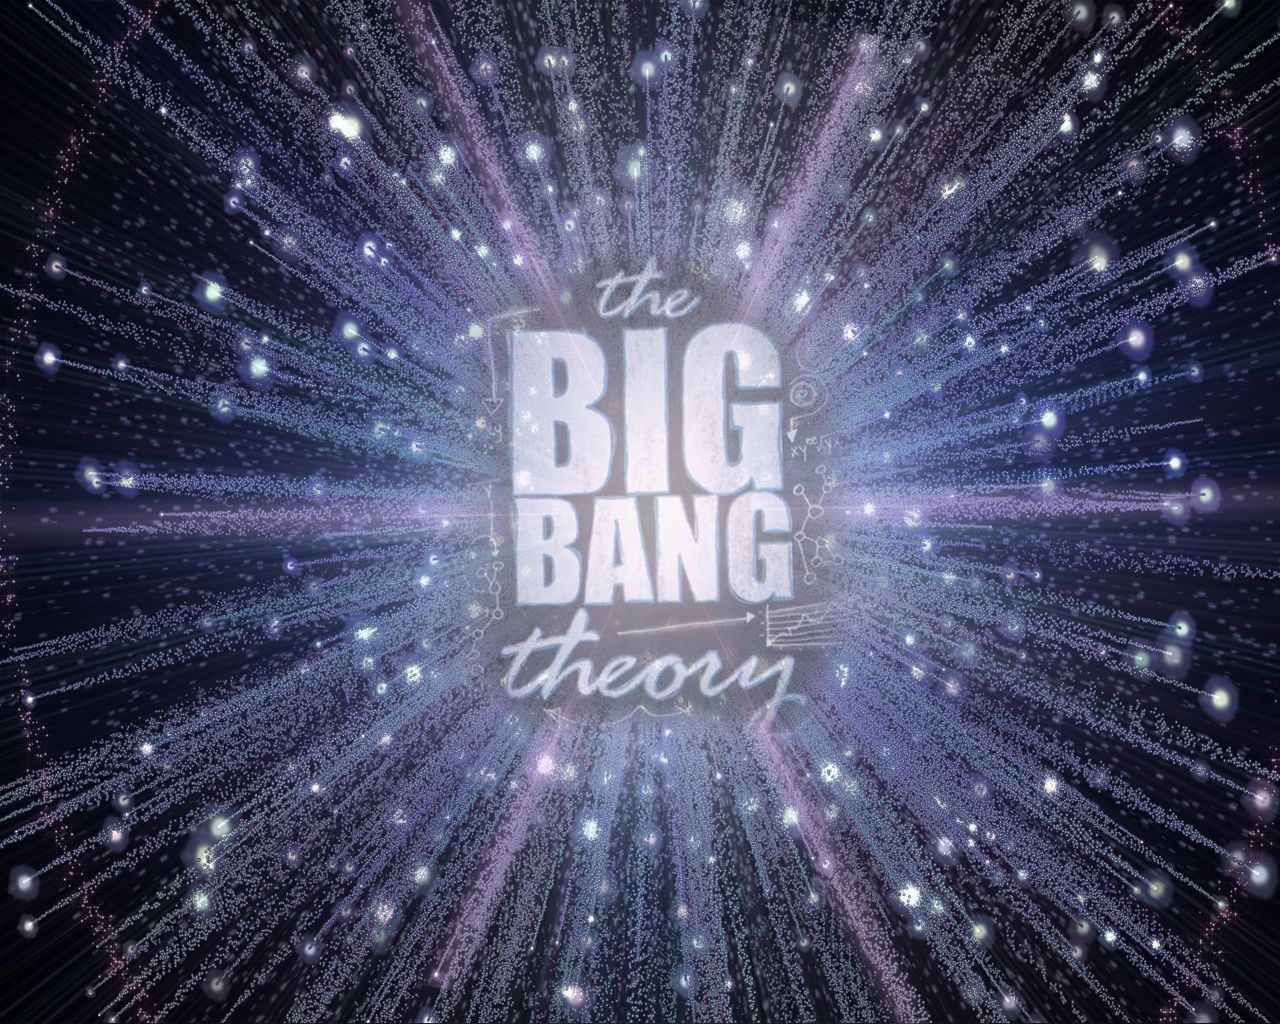 The Big Bang Theory Title Explosion Wallpaper